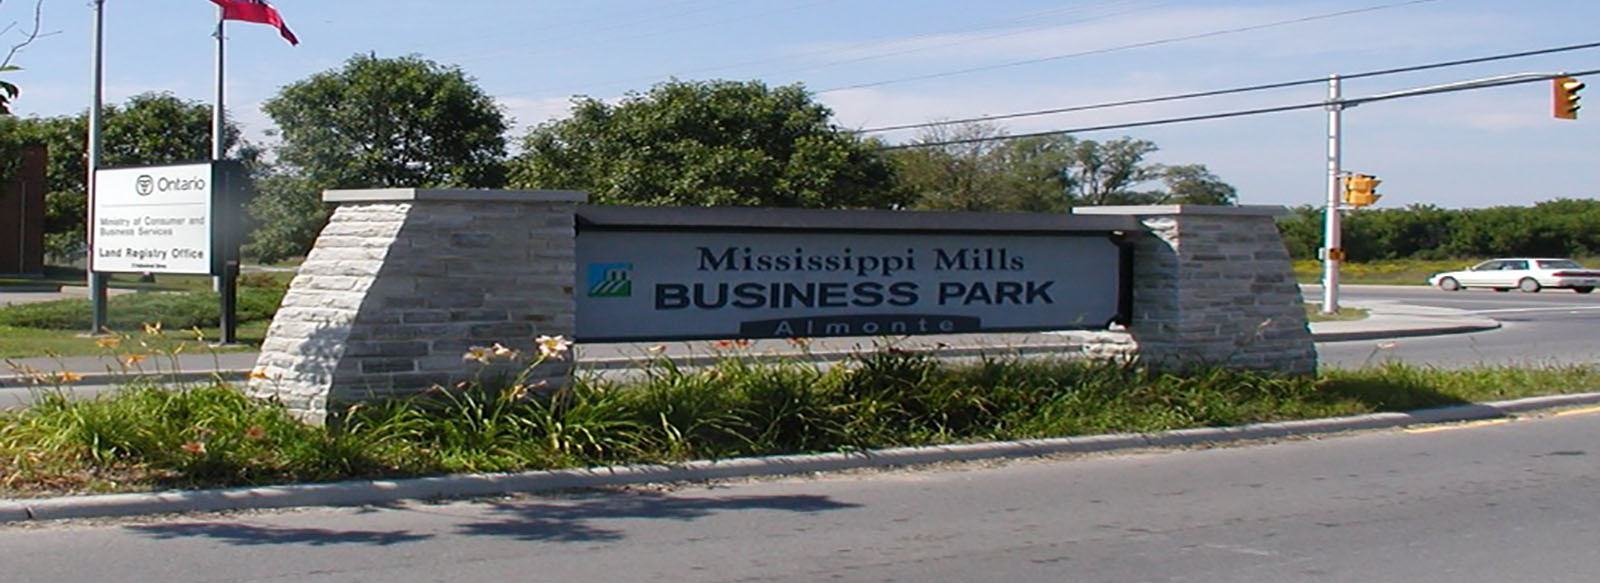 Business Park Sign